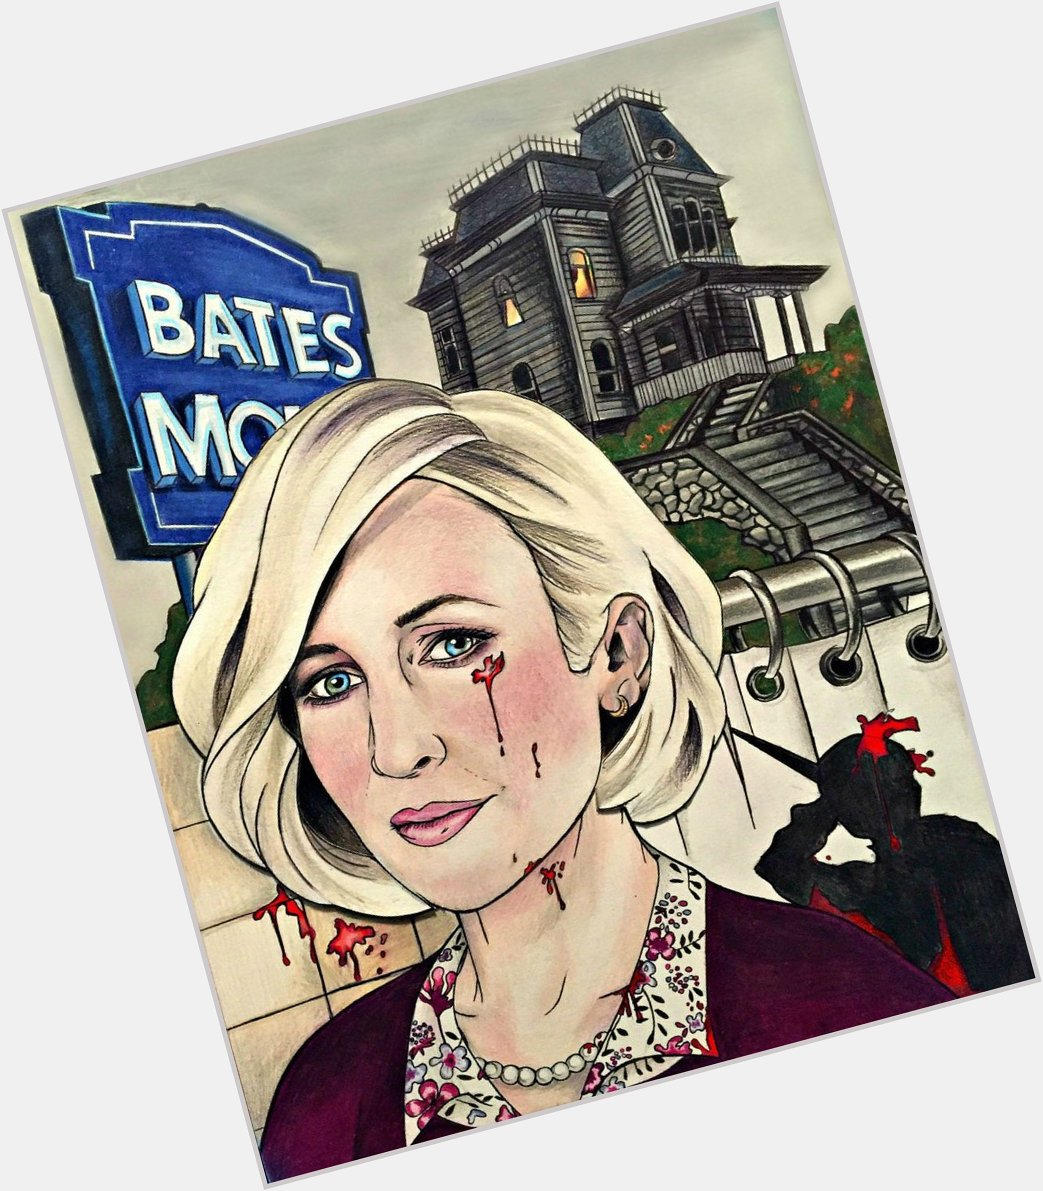 Bates Motel (2013) happy birthday to Vera Farmiga  